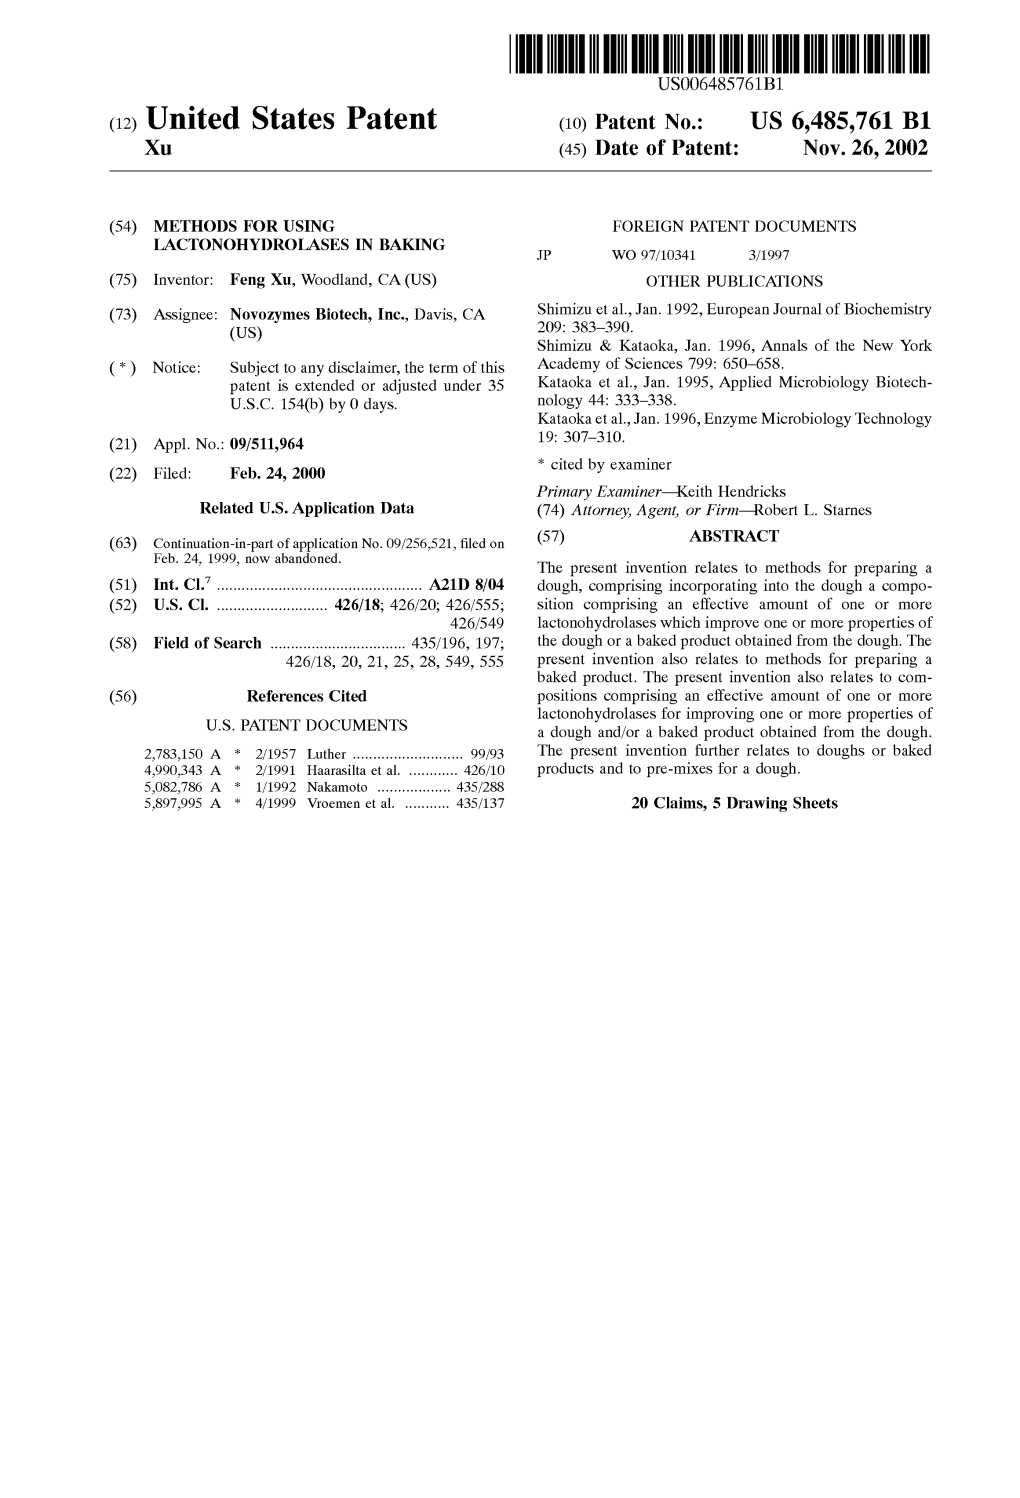 (12) United States Patent (10) Patent No.: US 6,485,761 B1 Xu (45) Date of Patent: Nov